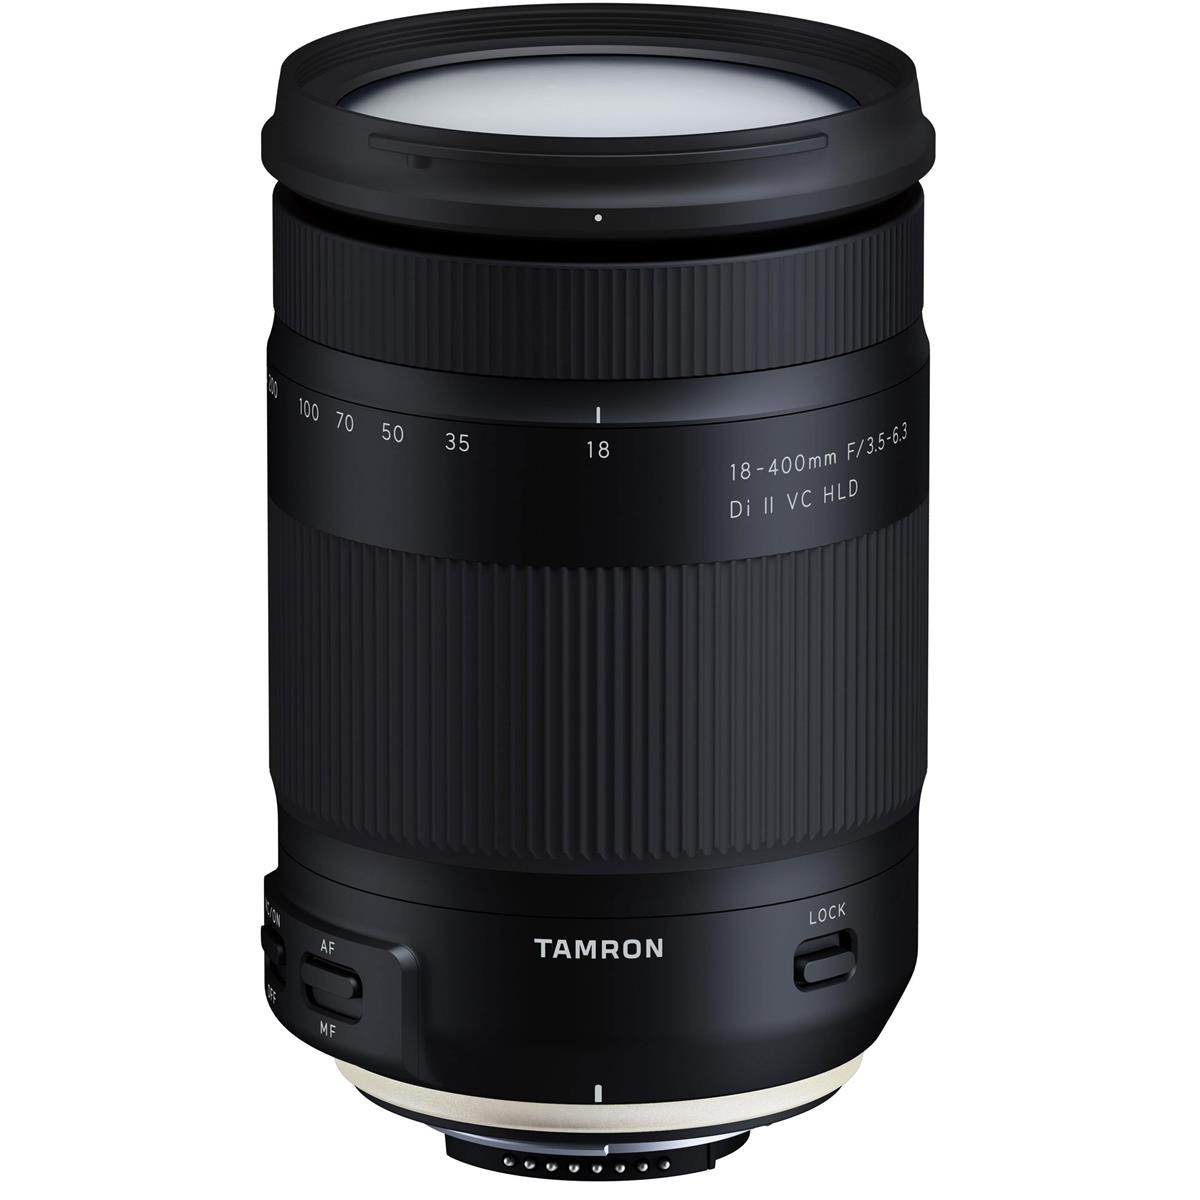 

Tamron 18-400mm f/3.5-6.3 Di II VC HLD Lens for Nikon F